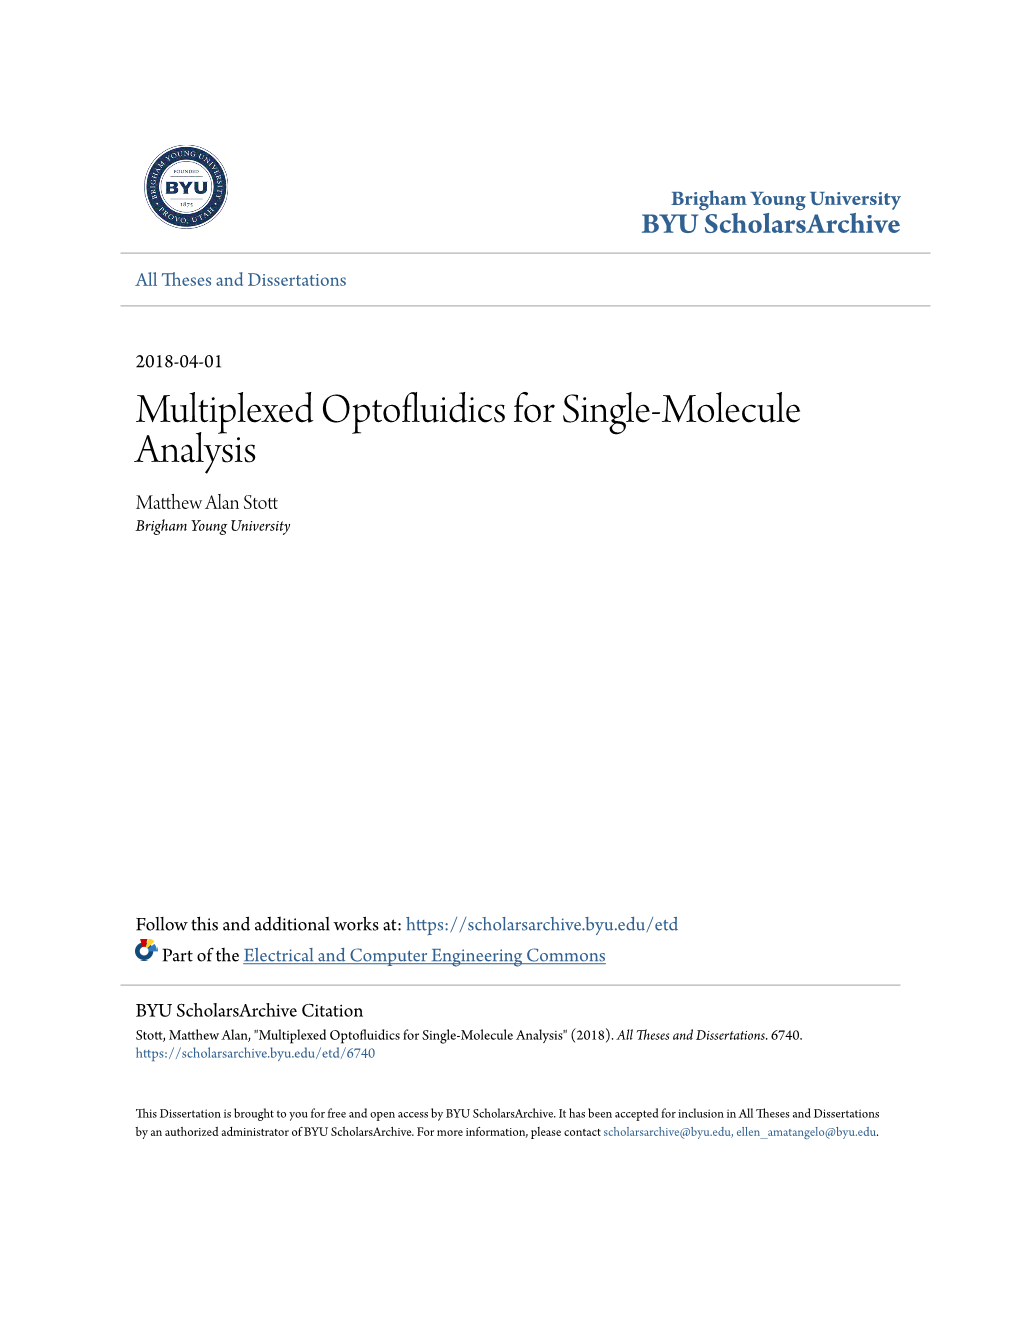 Multiplexed Optofluidics for Single-Molecule Analysis Matthew Alan Stott Brigham Young University